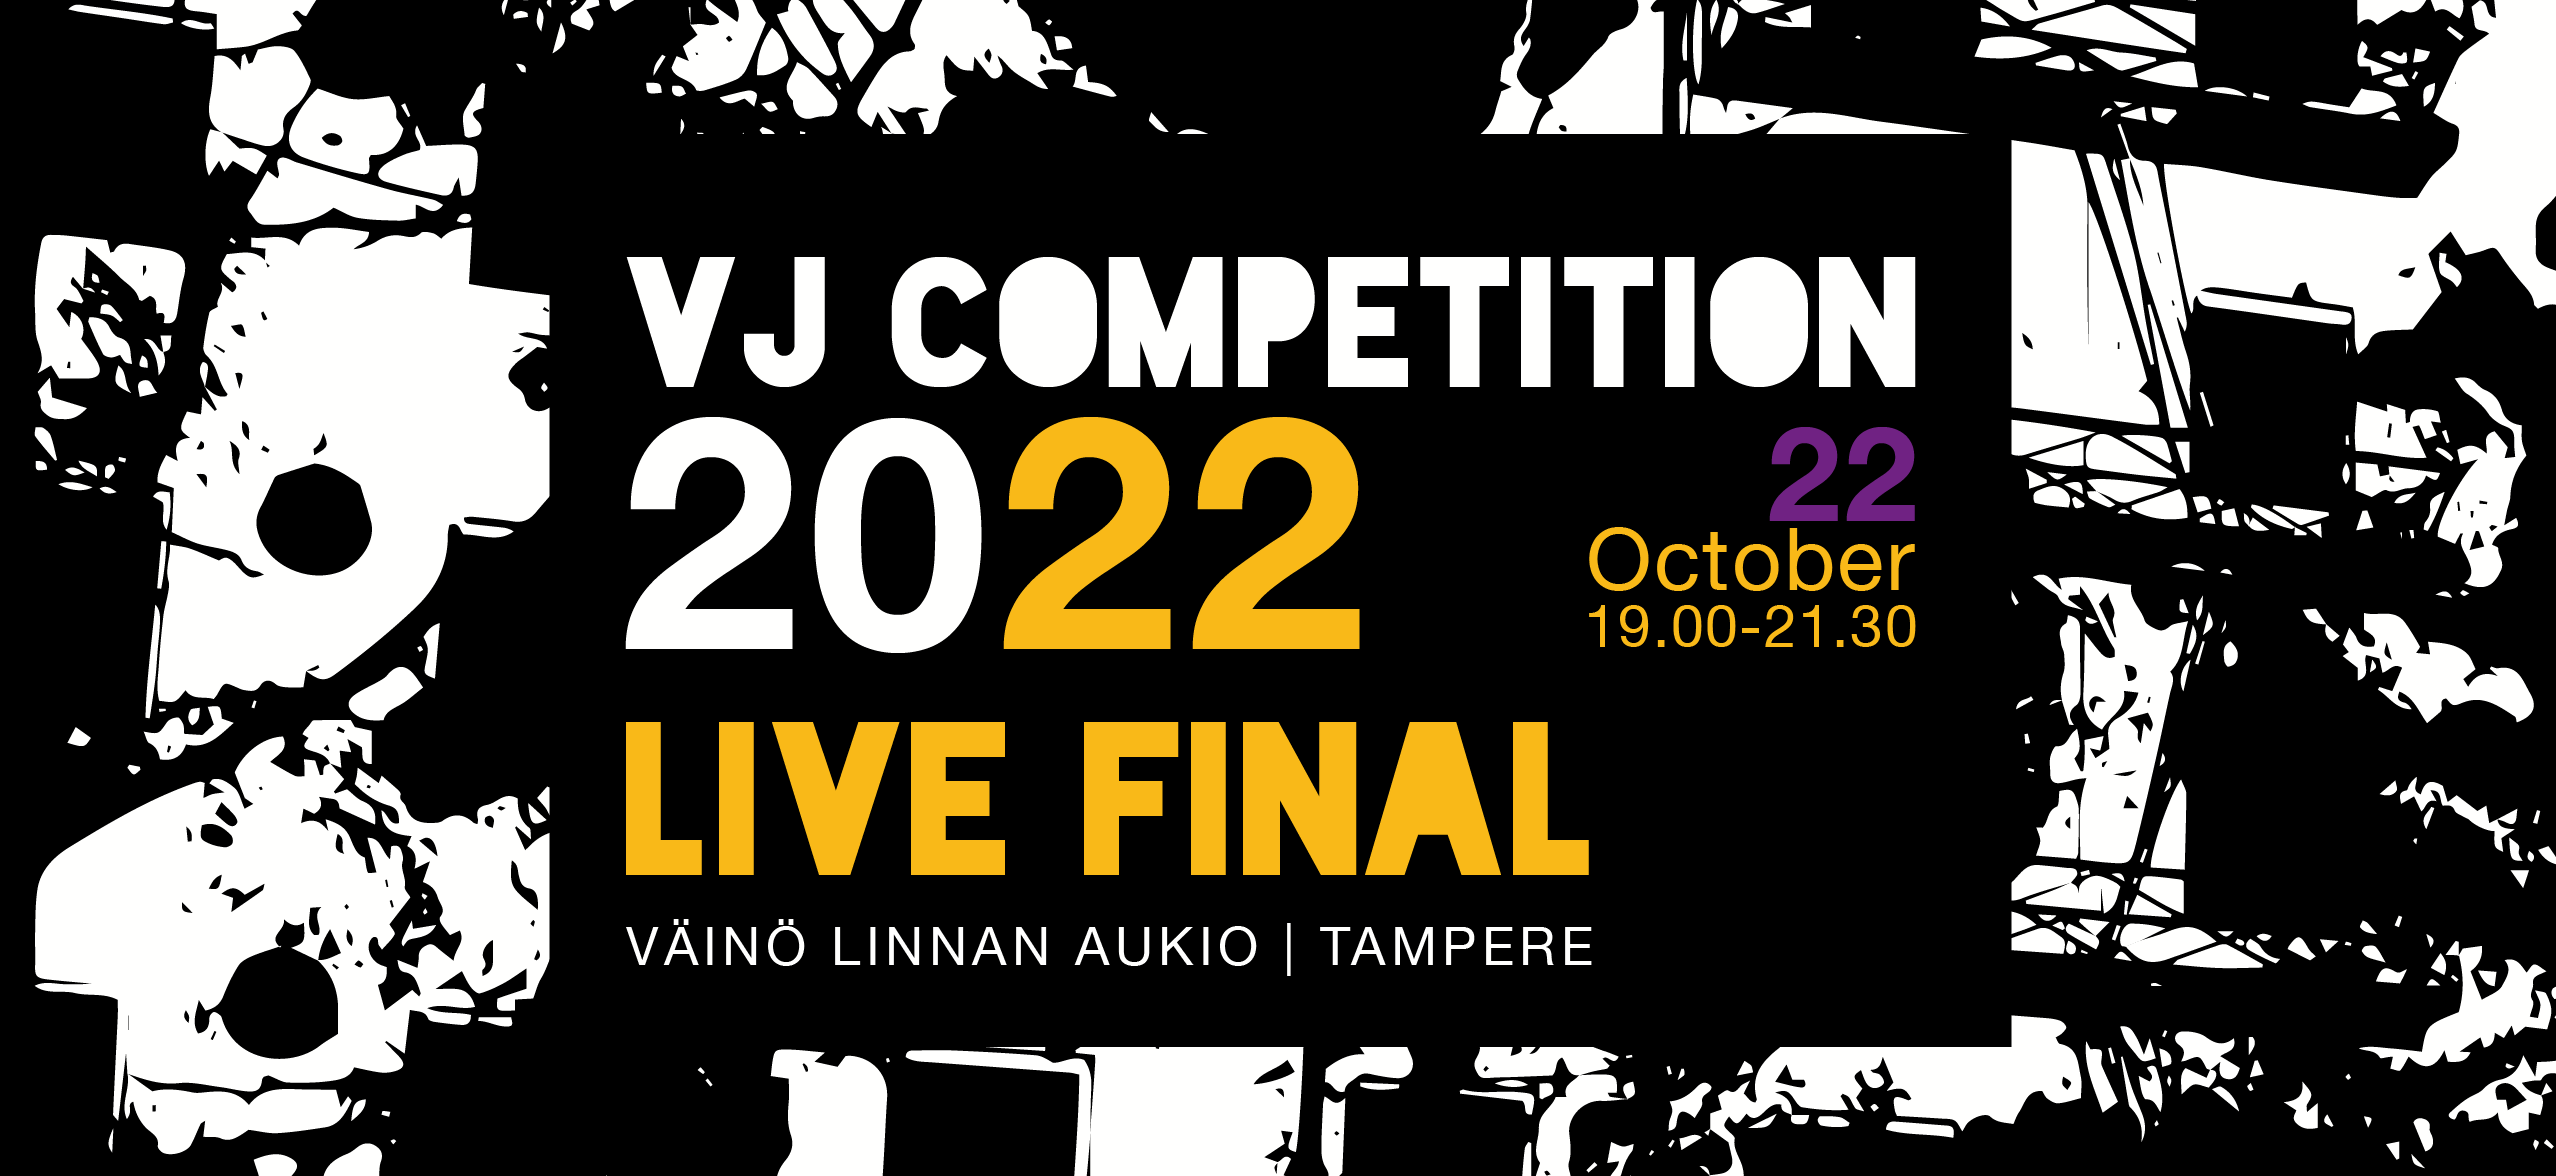 VJ Competition 2020 Live final, 22. October 19:00 - 21:30. Väinö Linnan aukio, Tampere.